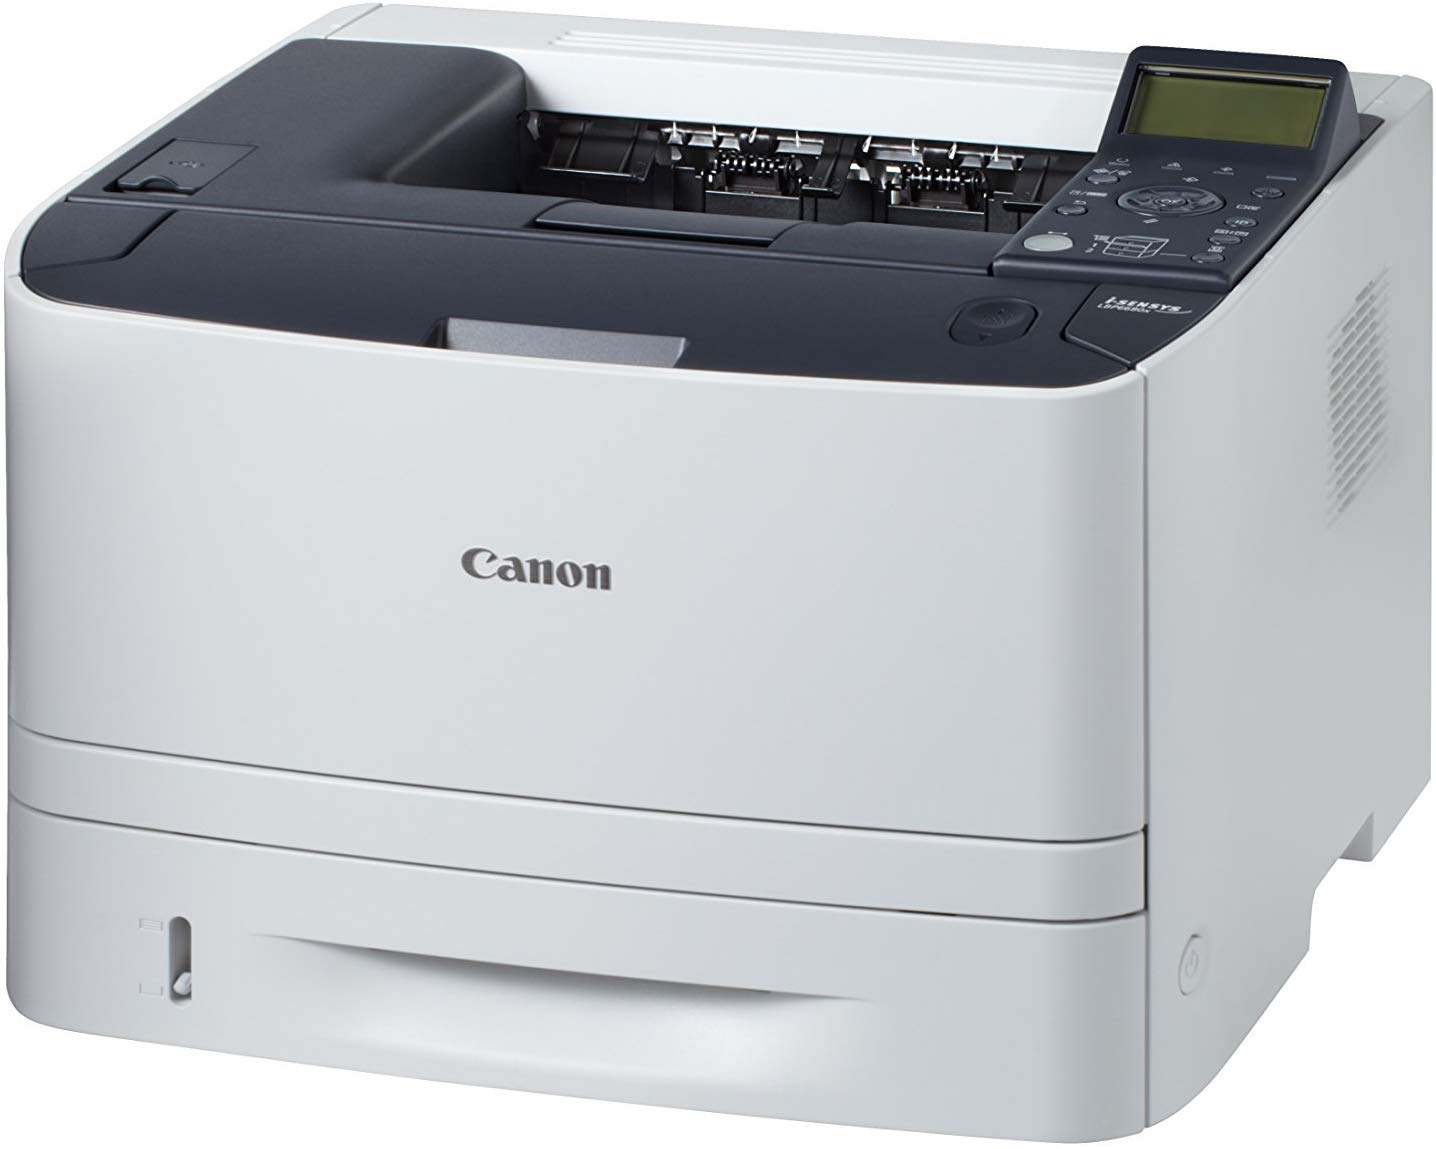 Canon i-Sensys LBP6680x Laser Printer 1200x1200 dpi MONOCHROME LASER PRINTER